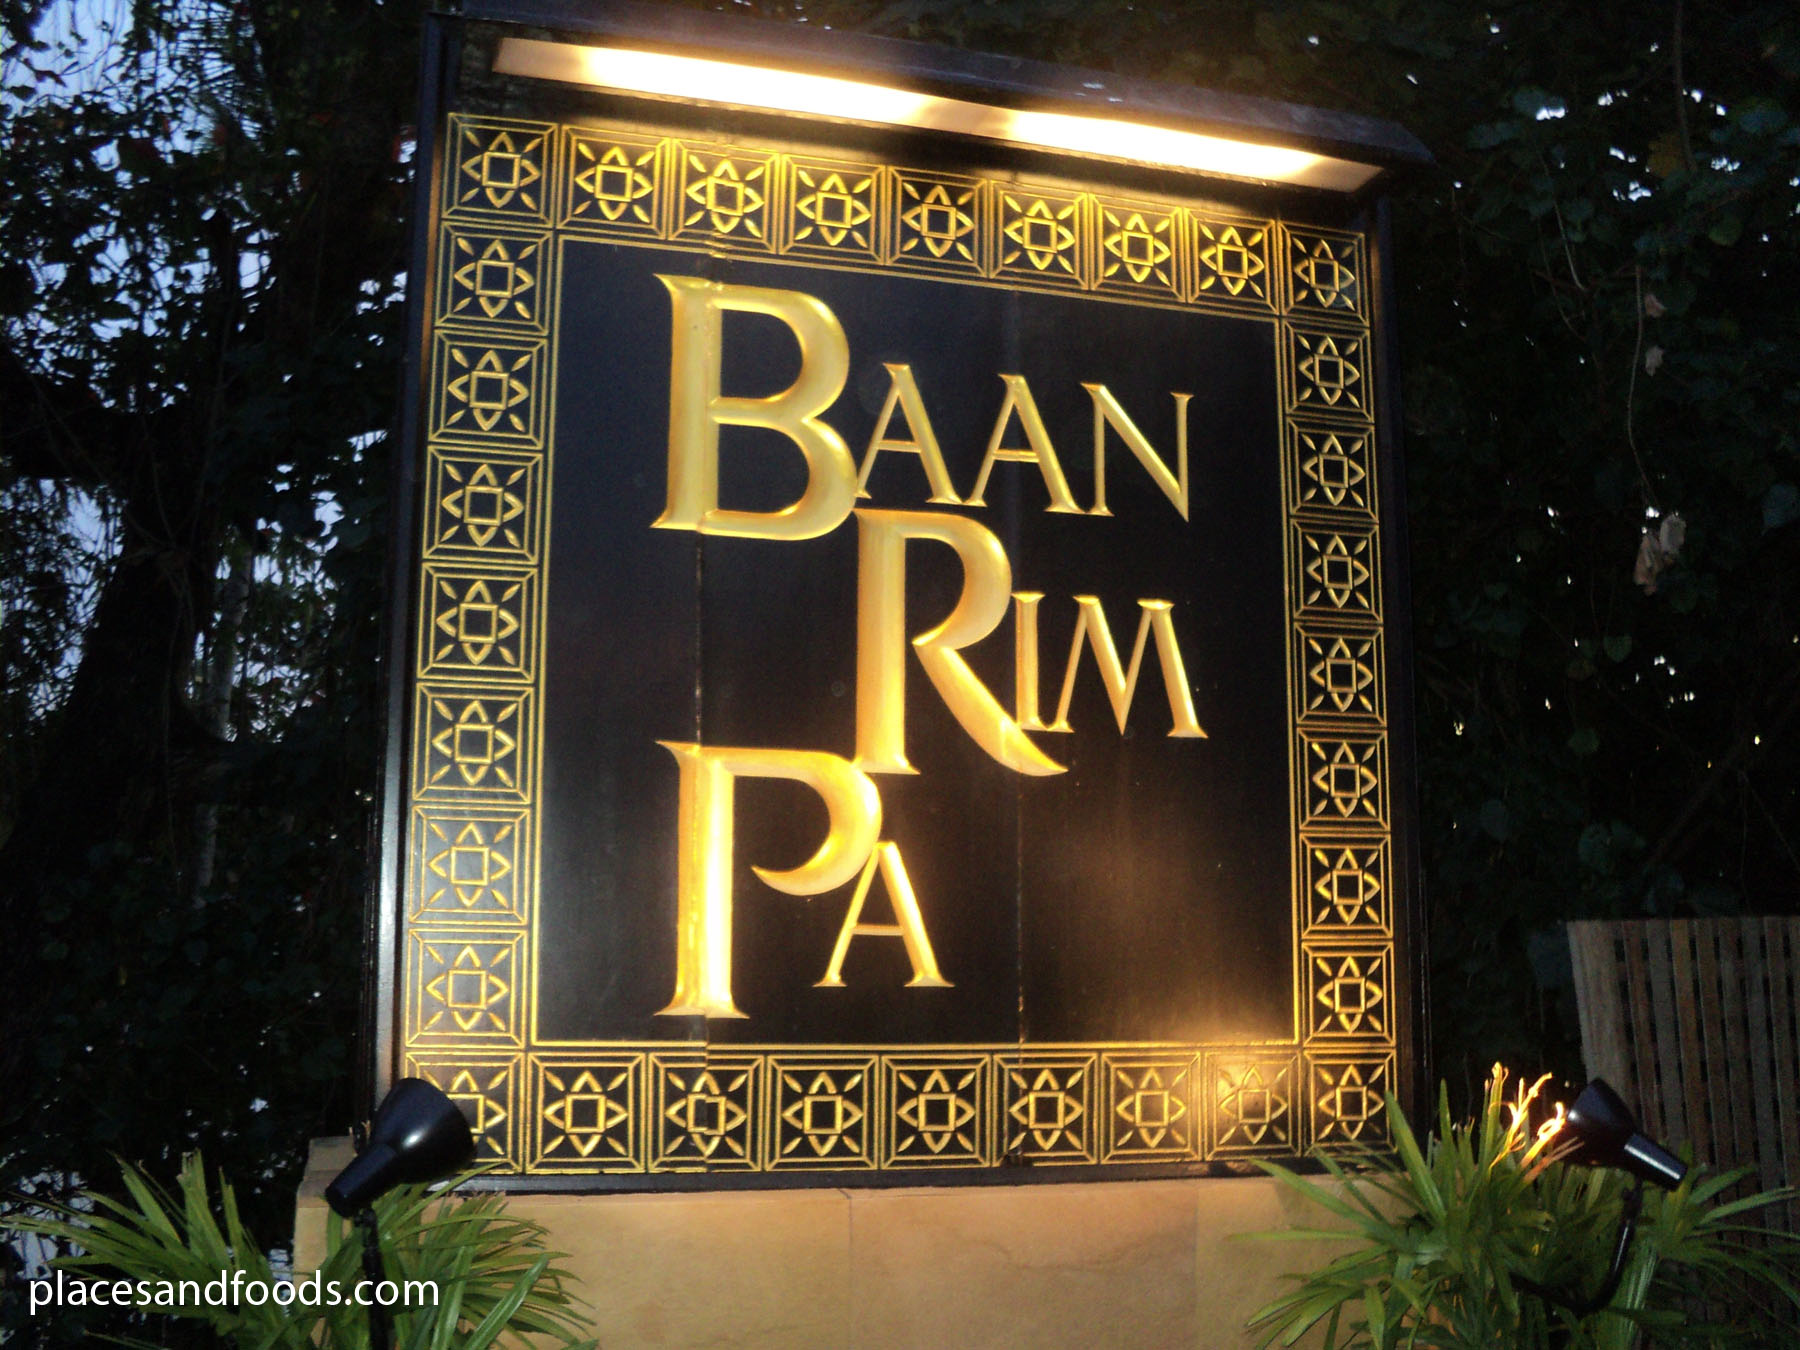 Baan Rim Pa: Phuket and Thailand’s Finest Restaurant